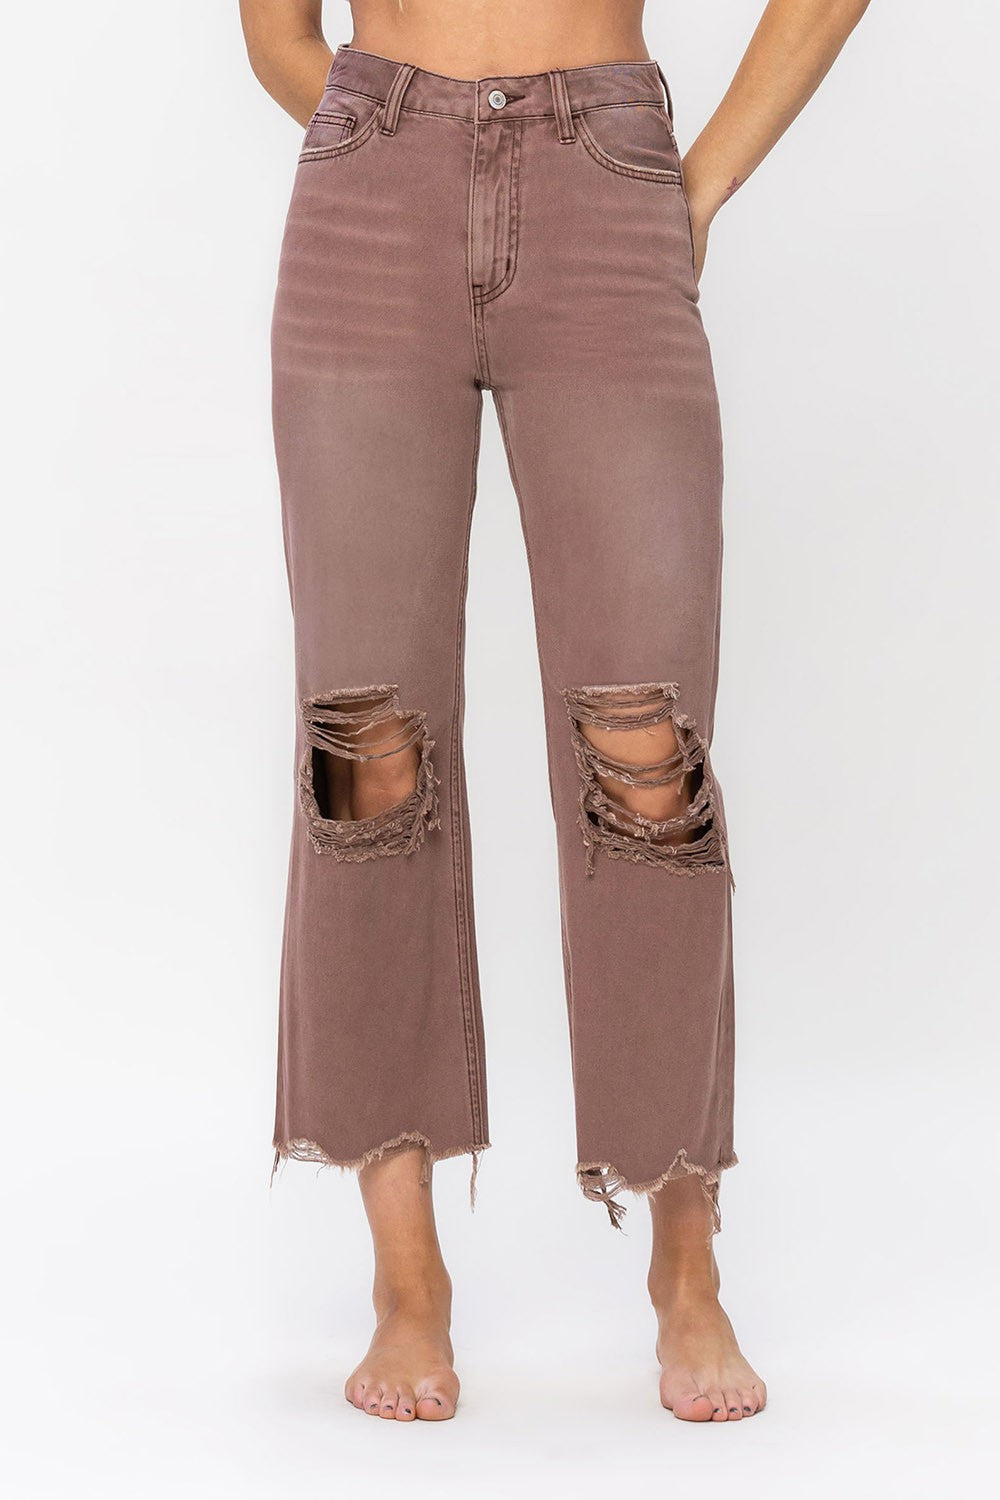 The Leslie High Waist Vintage Flare Jeans - Aztec